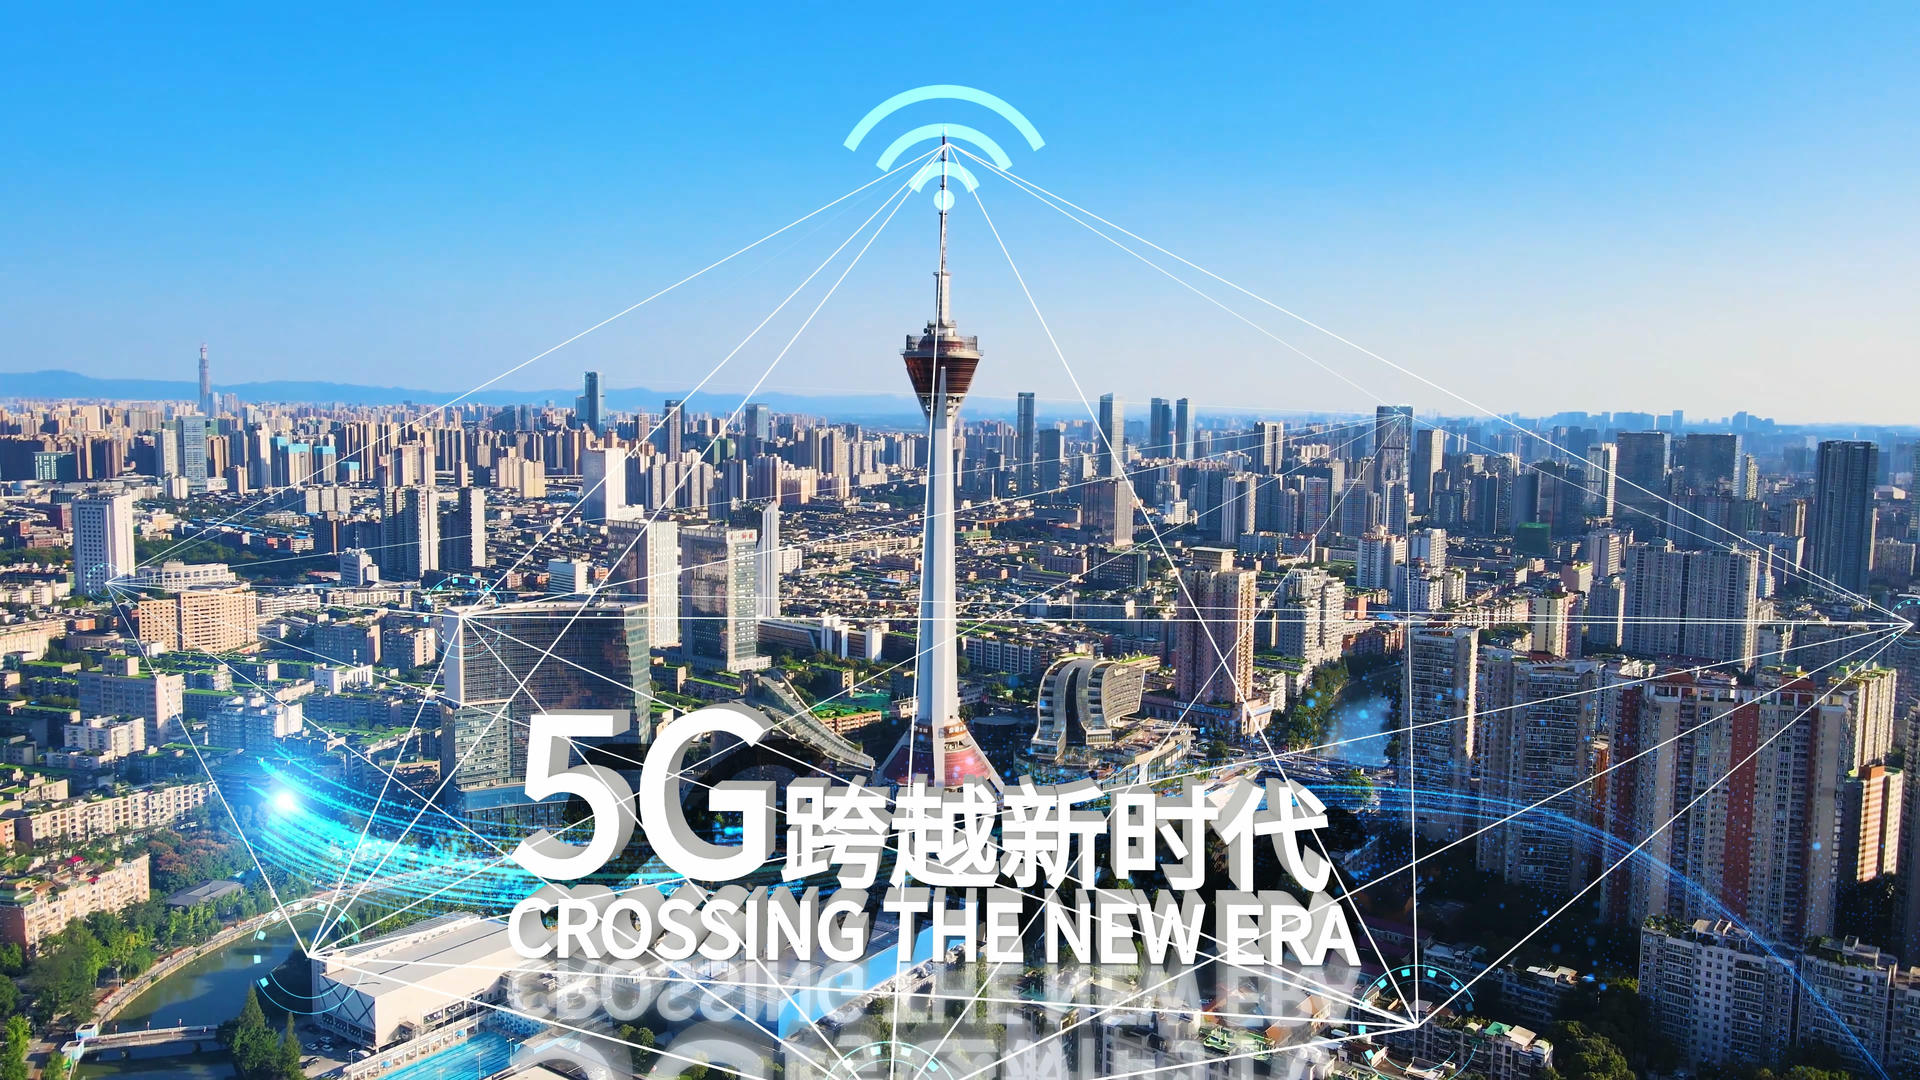 5G互联片头4K科技城市AE模板视频的预览图